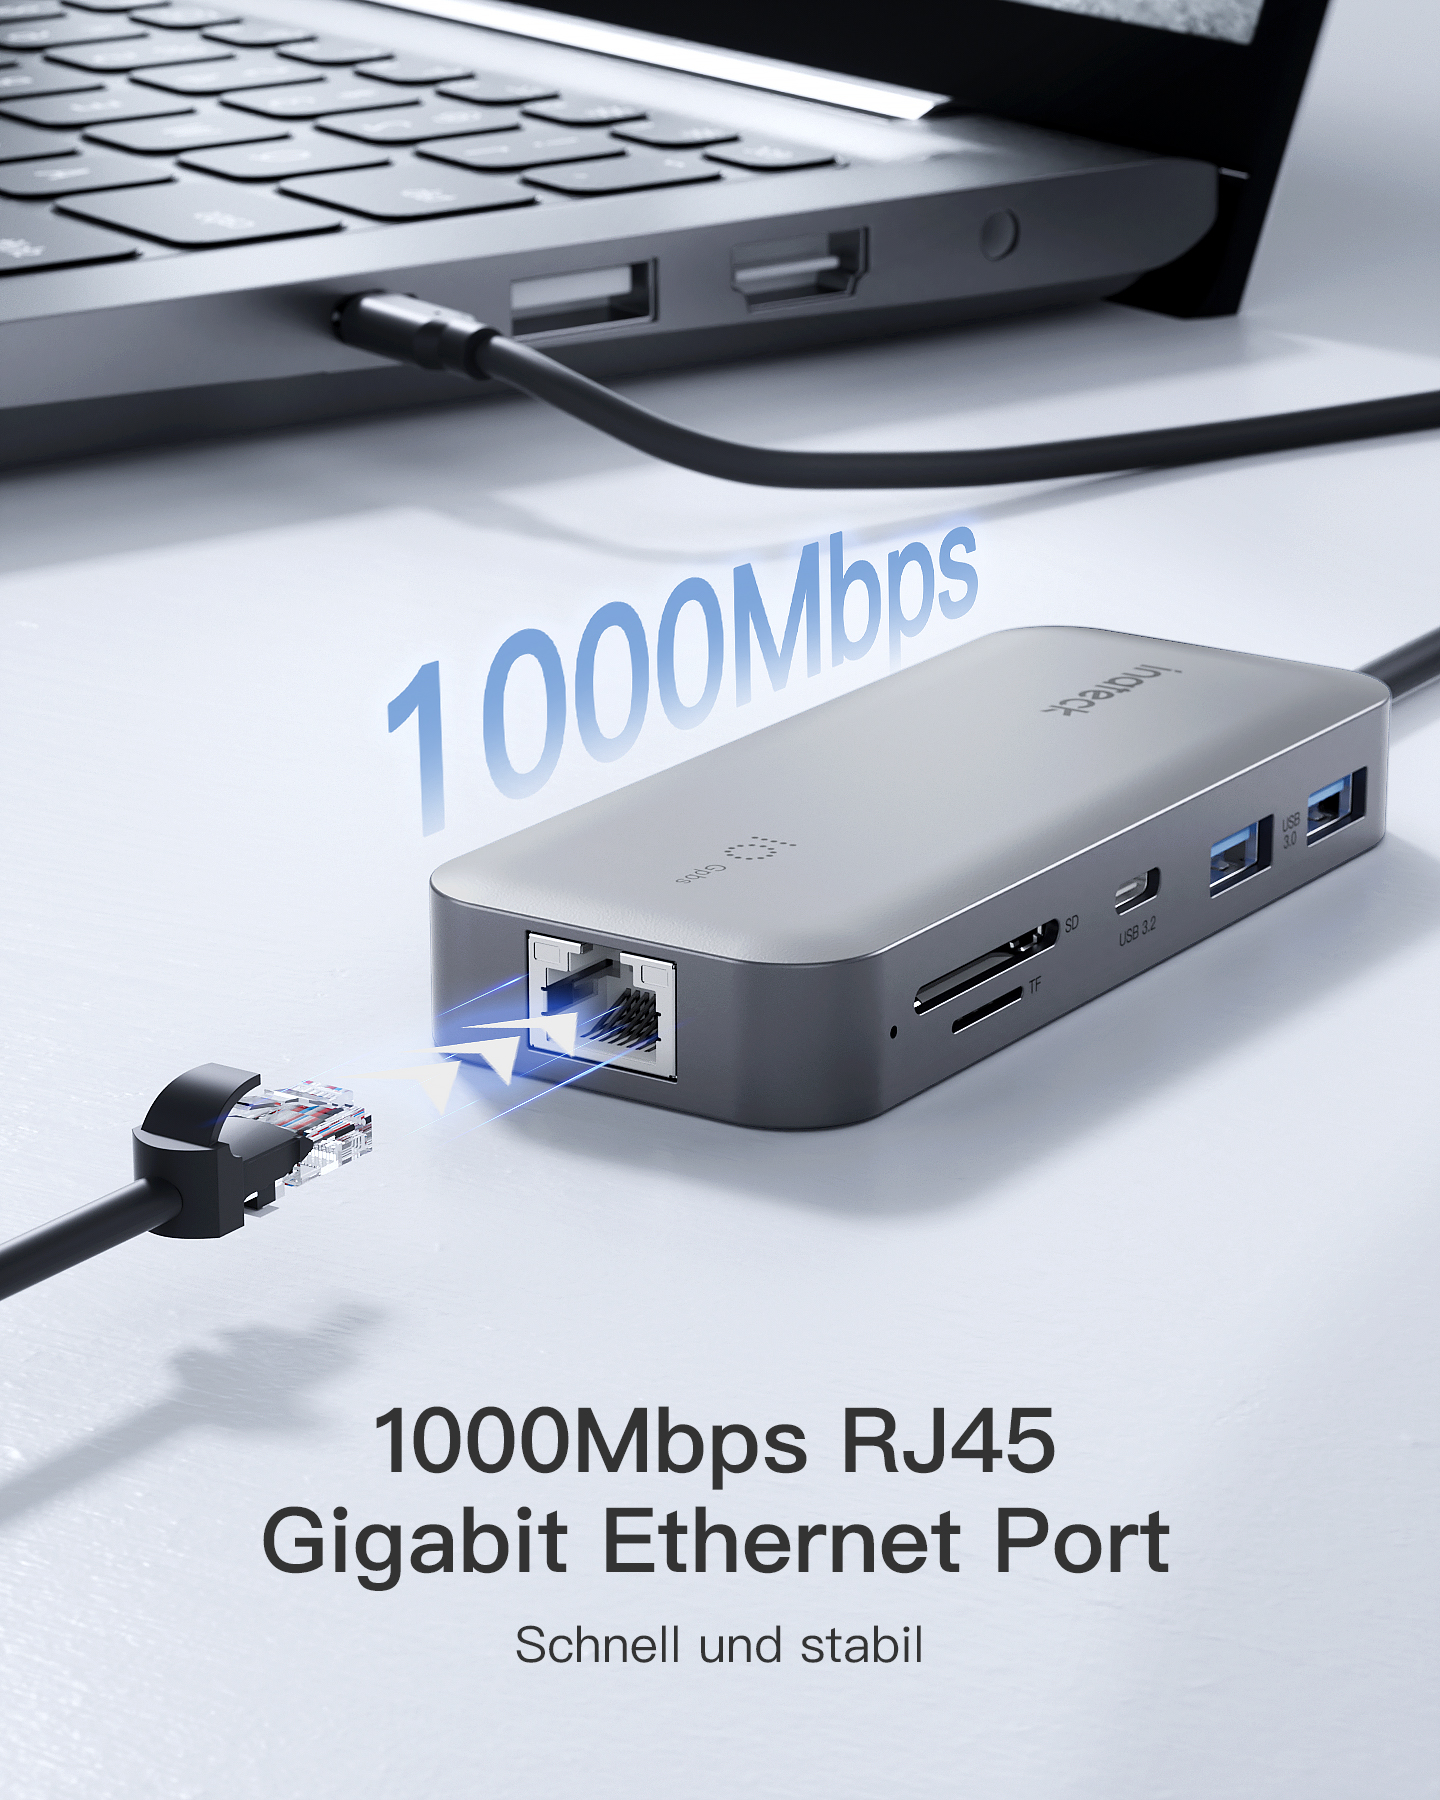 10 2 Hub, 60Hz Ethernet, USB INATECK PD, silver hub, in USB HDMI, A, 2 C 4K USB USB 100W SD/TF, RJ45 Video＋Data, 1 C,